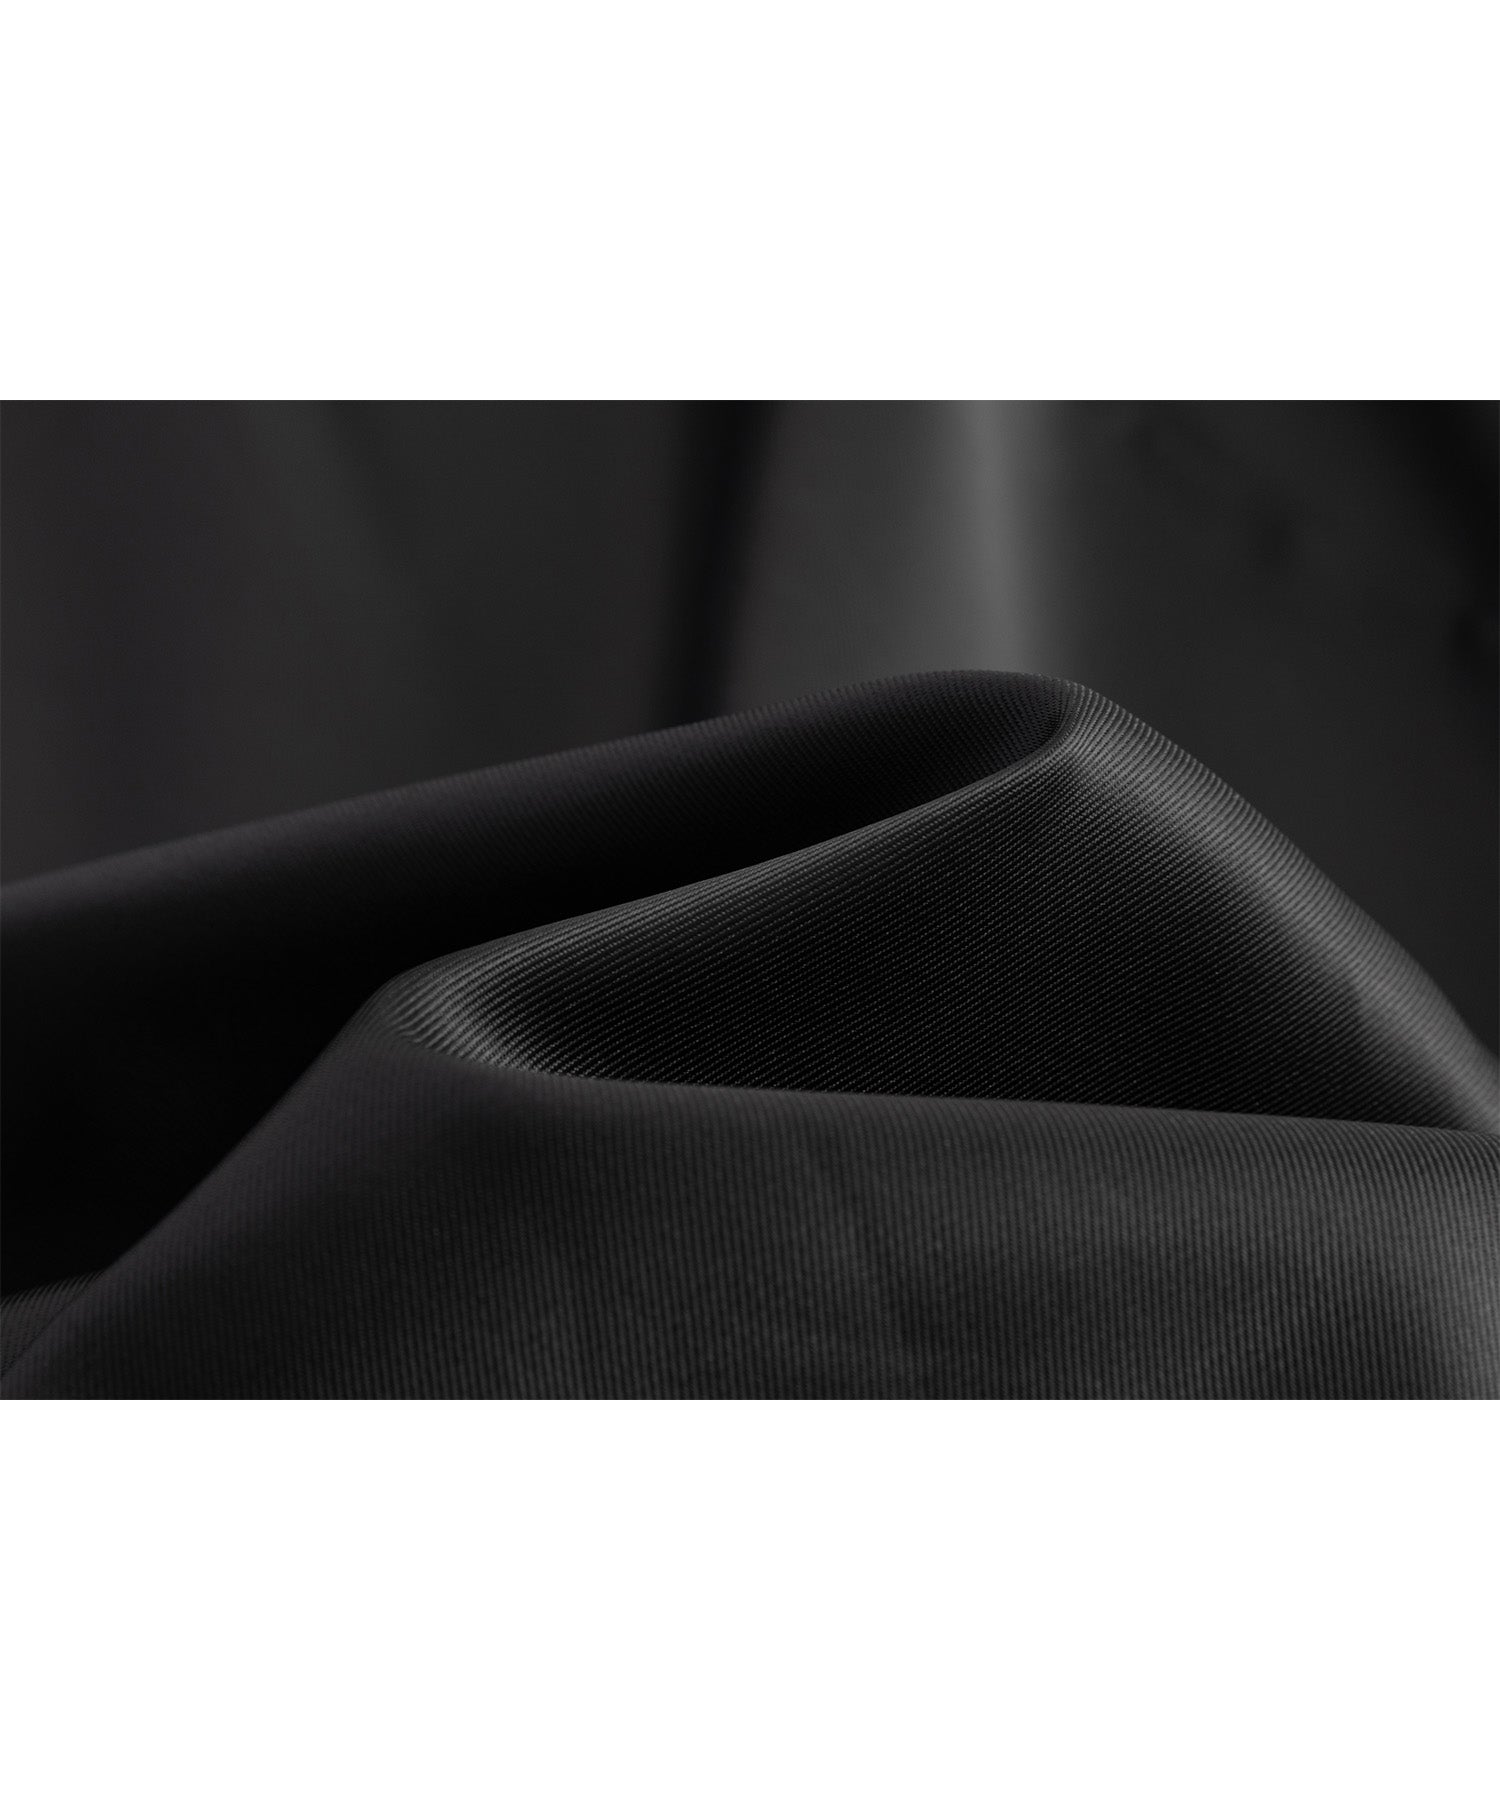 Volume Sleeve Over Silhouette Stainless Steel Collar Coat 